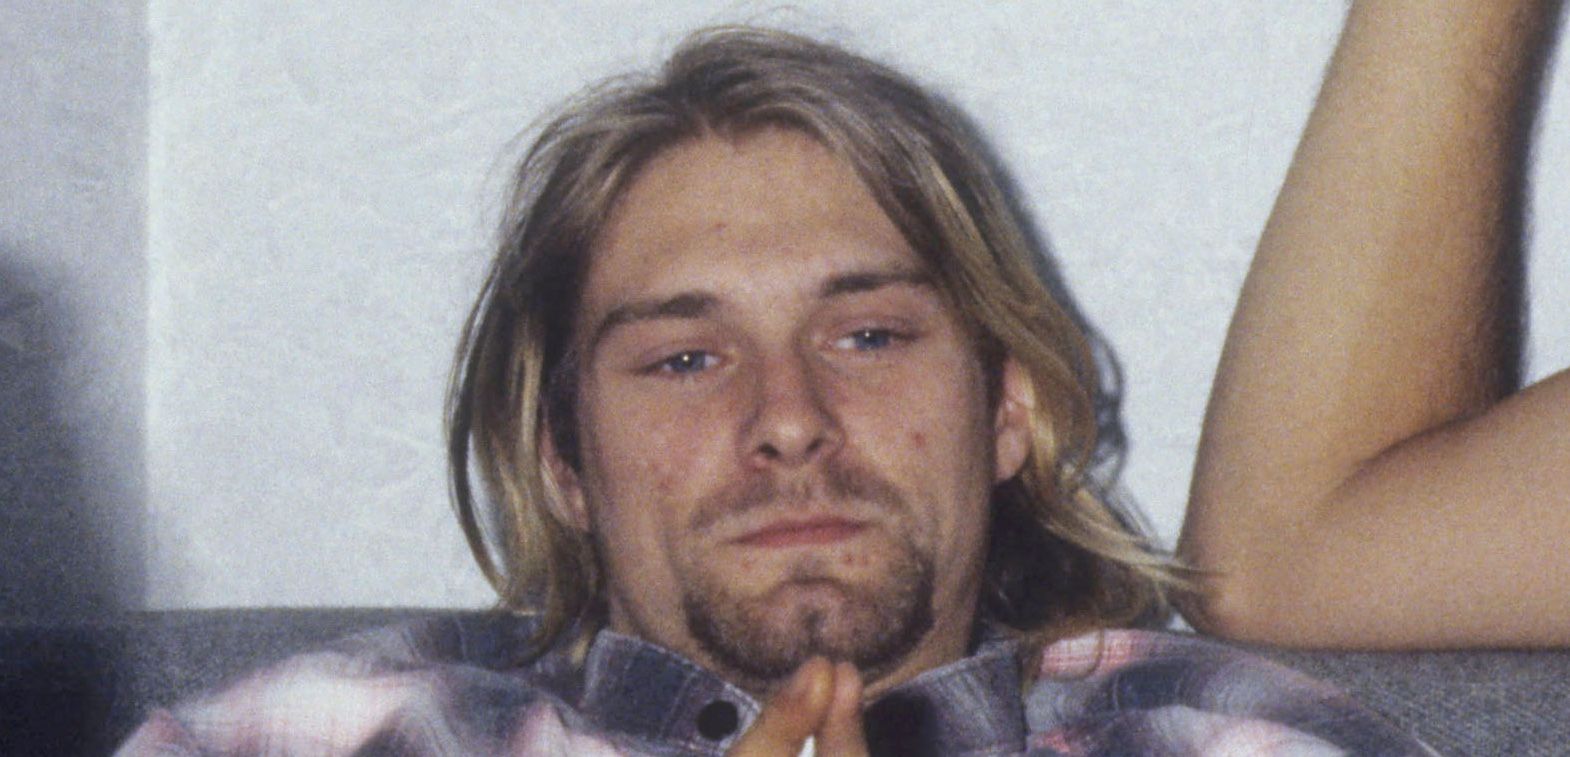 Kurt Cobain 